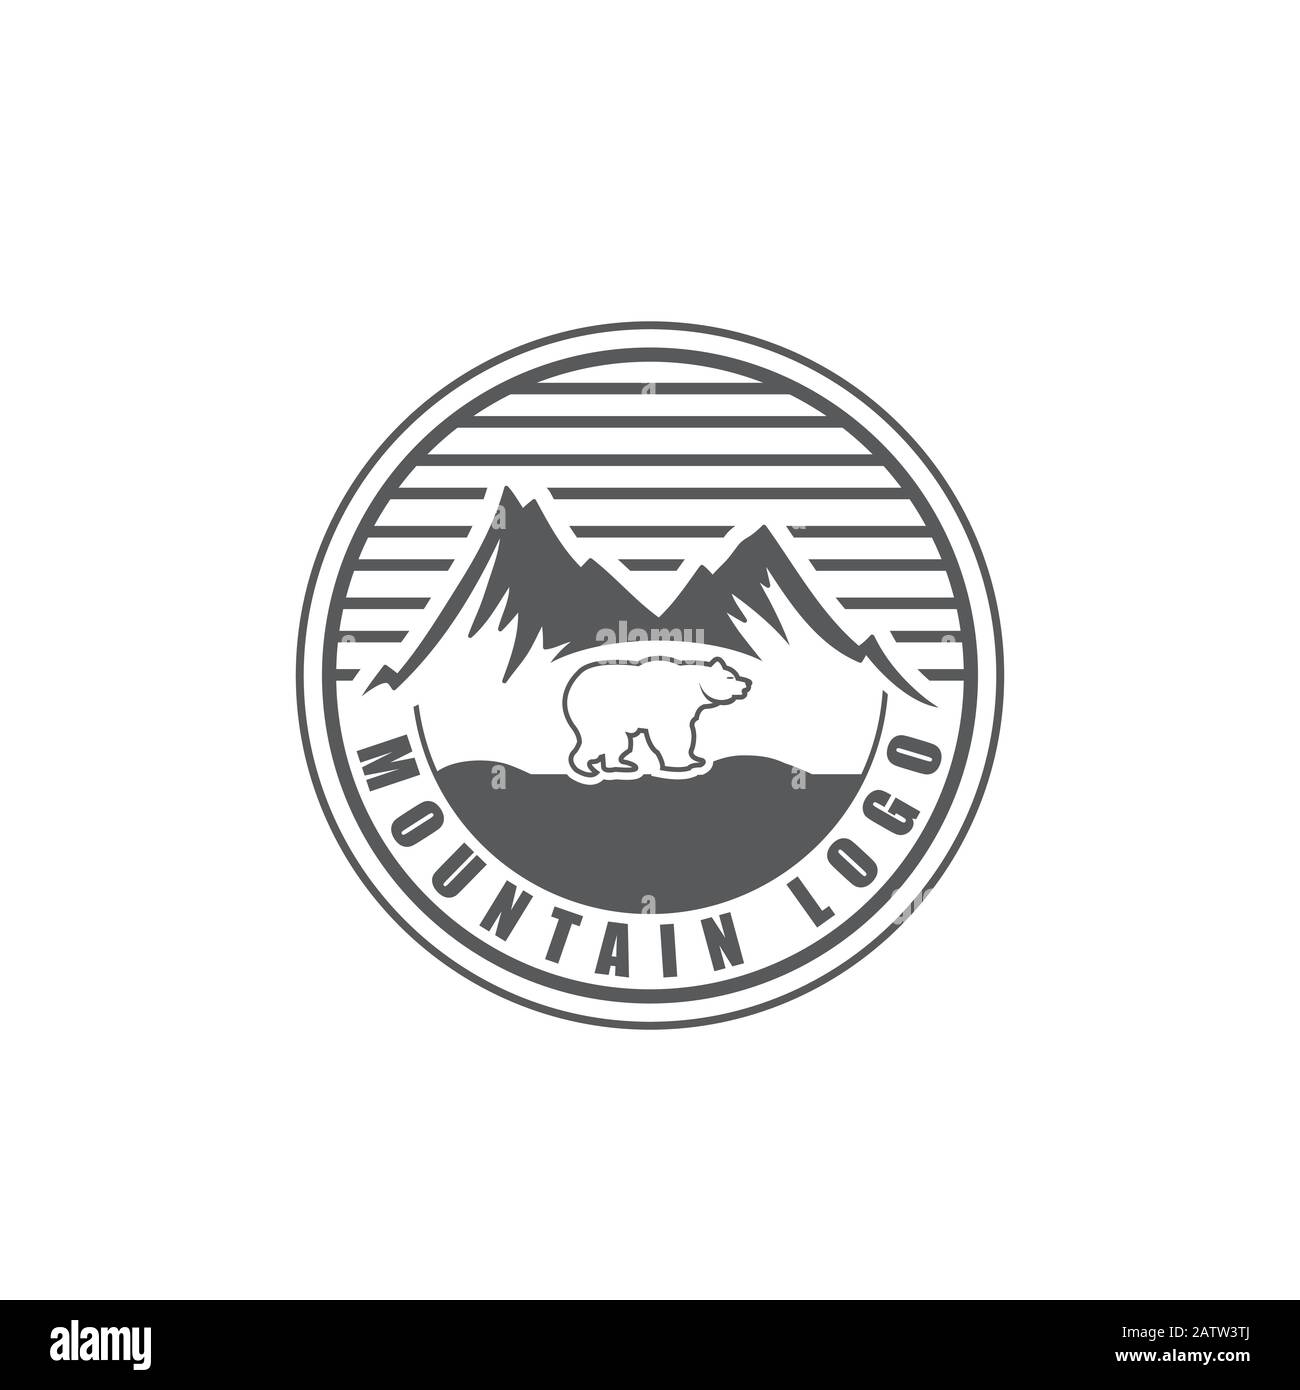 mountain hill logo design, vector illustration. modern style. Stock Vector